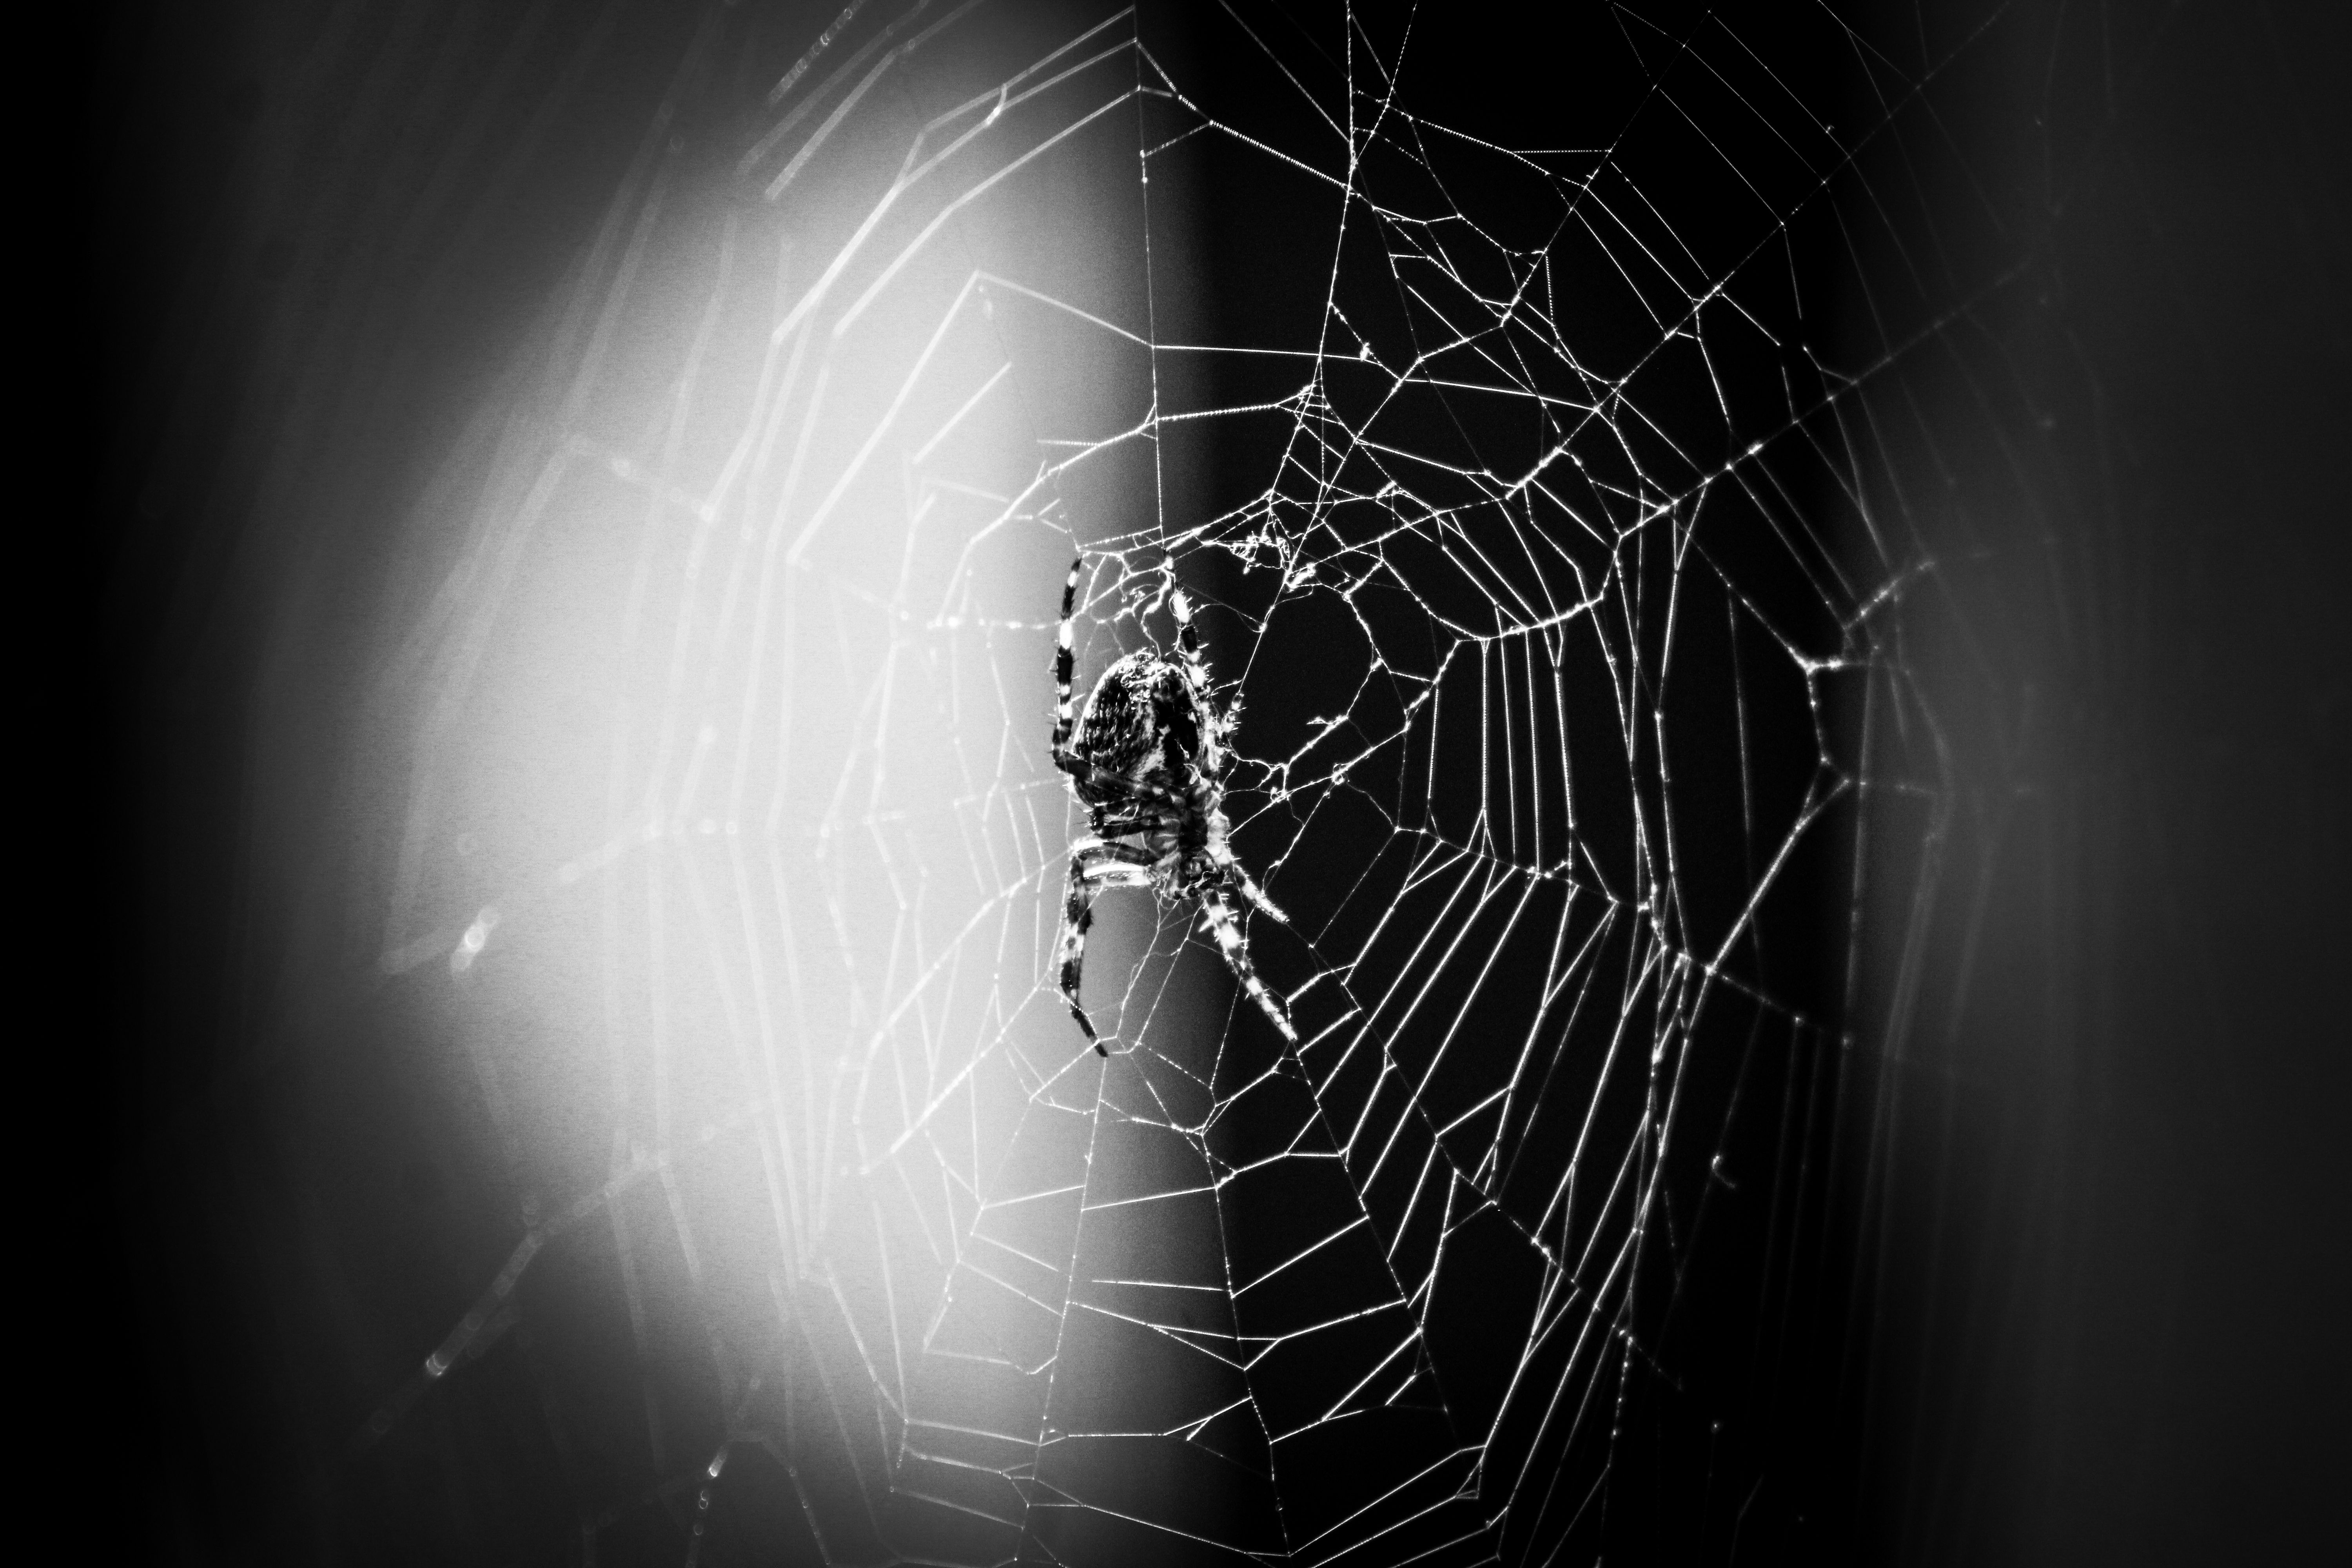 Spider Symbolism, Spider Meaning